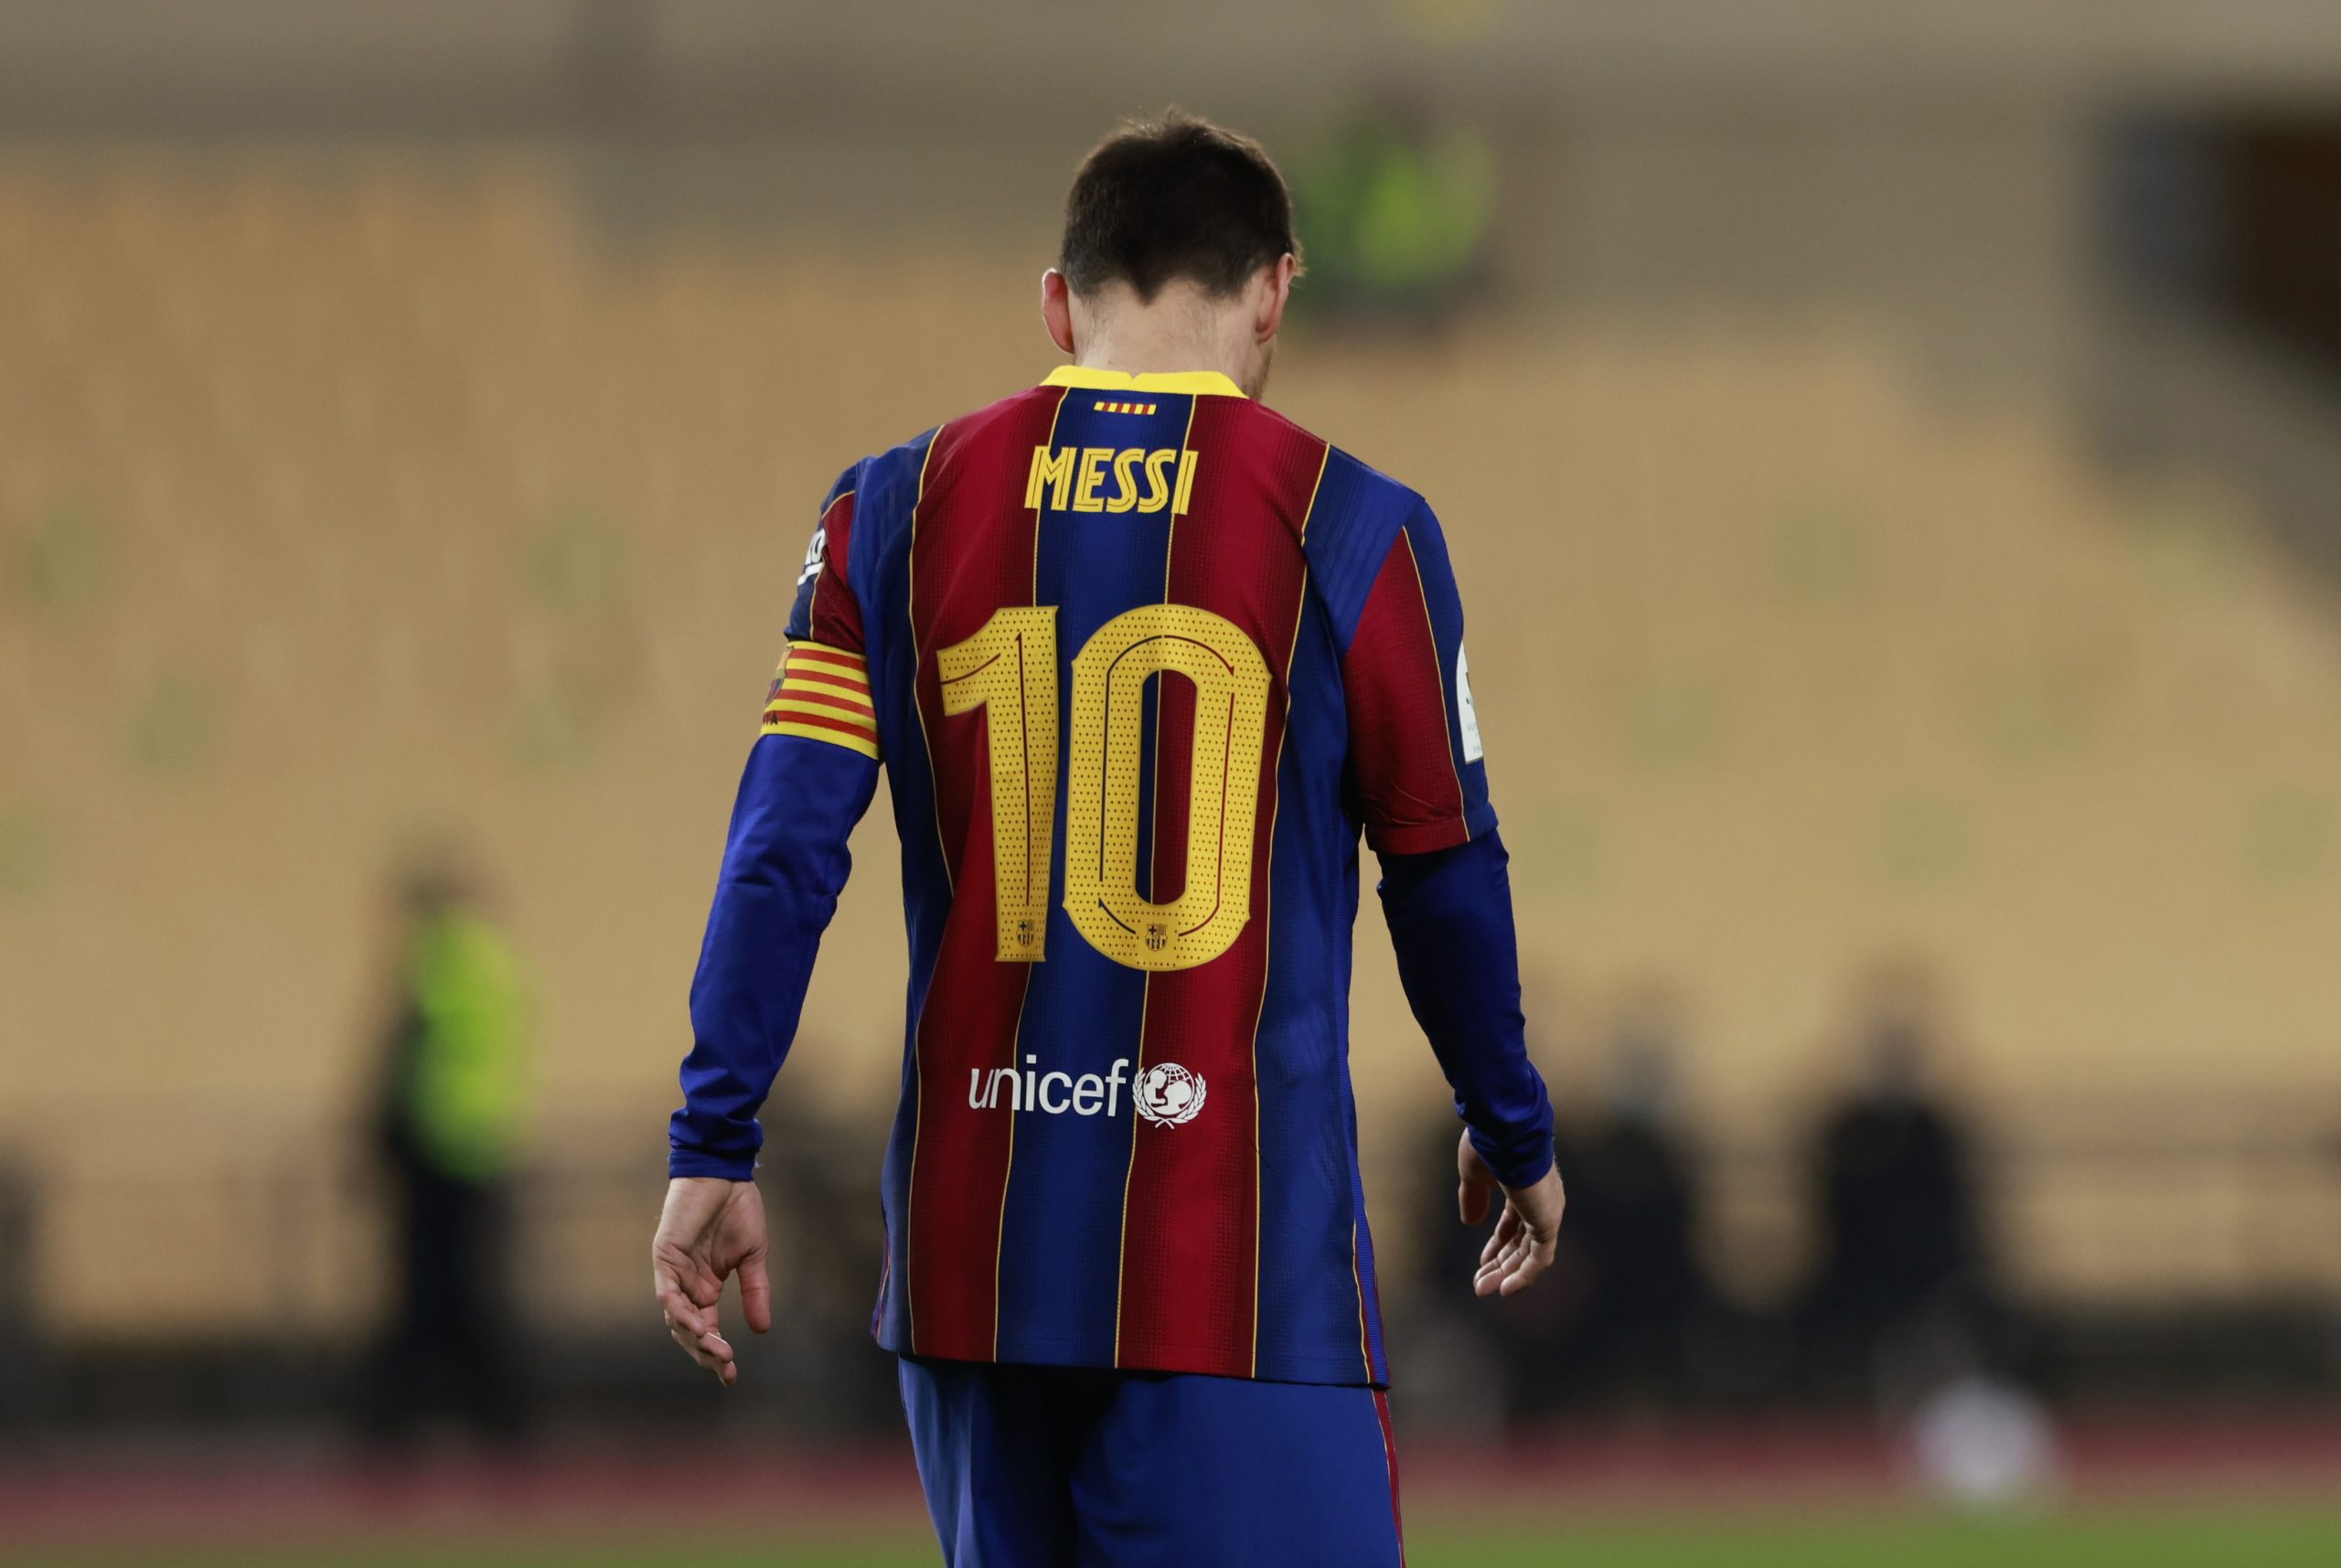 Triste, formé au FC Barcelone, le « futur Messi » va prendre sa retraite